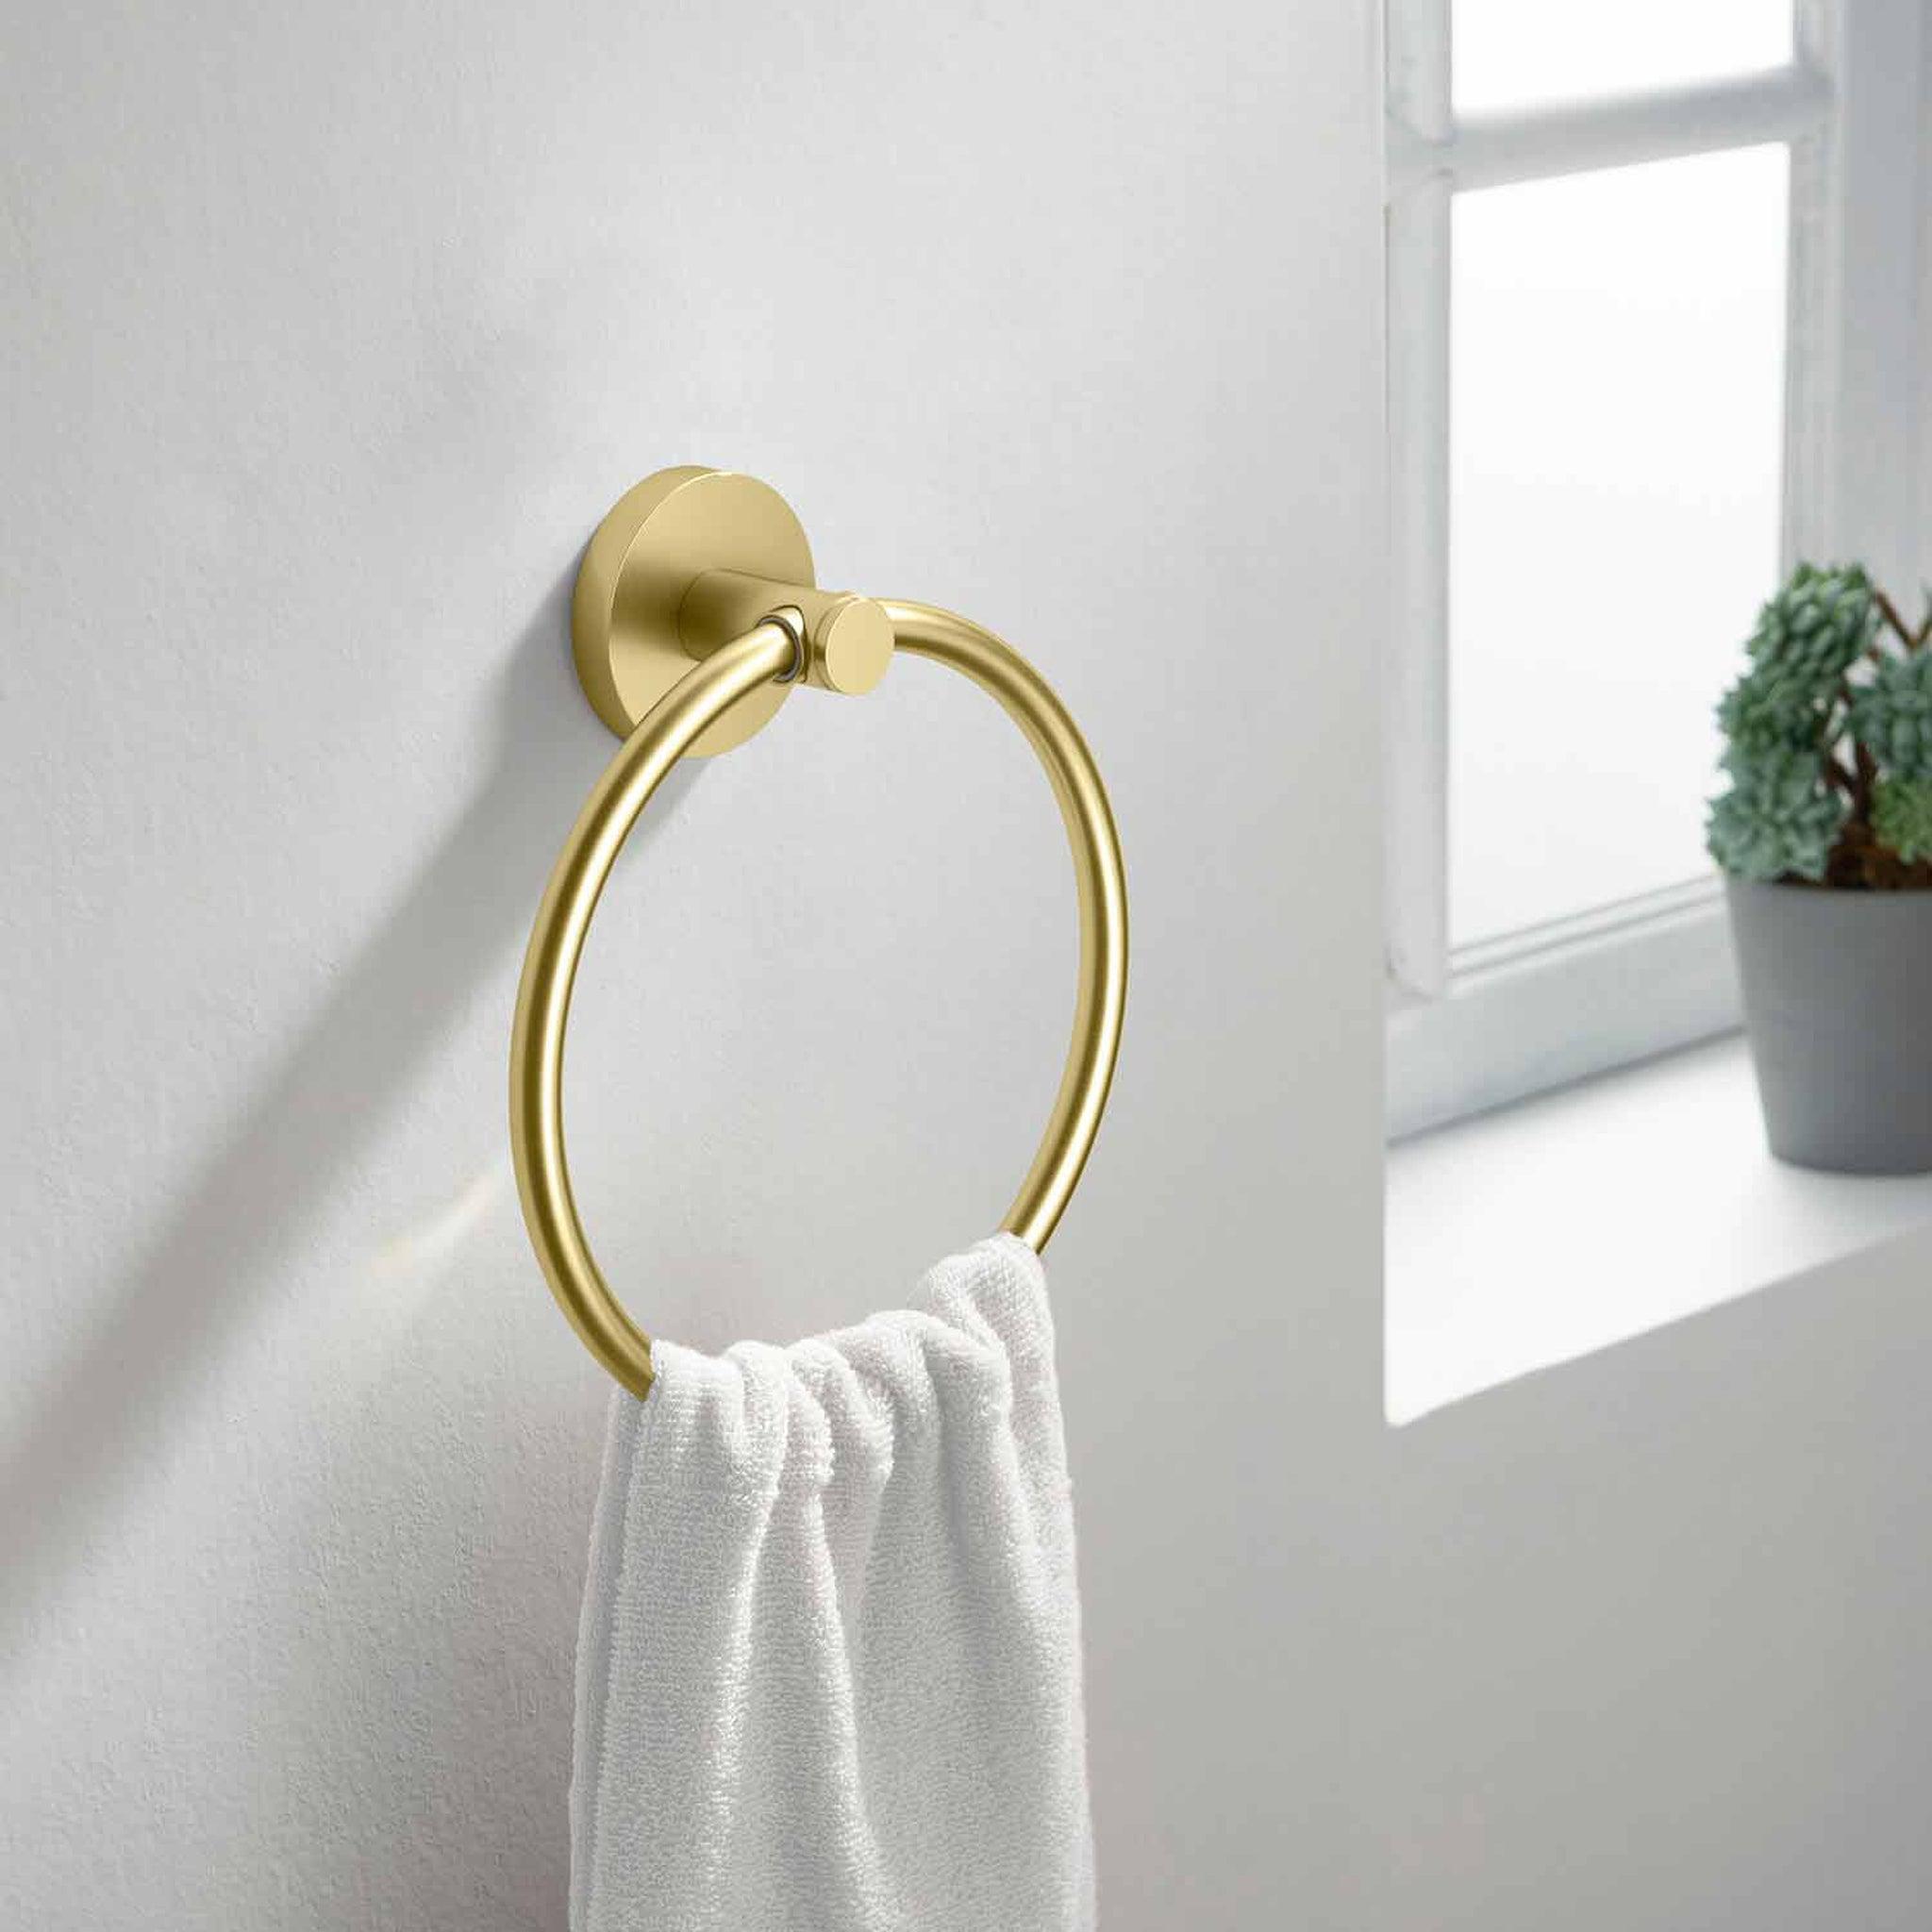 KIBI, KIBI Circular Brass Bathroom Towel Ring in Brushed Gold Finish